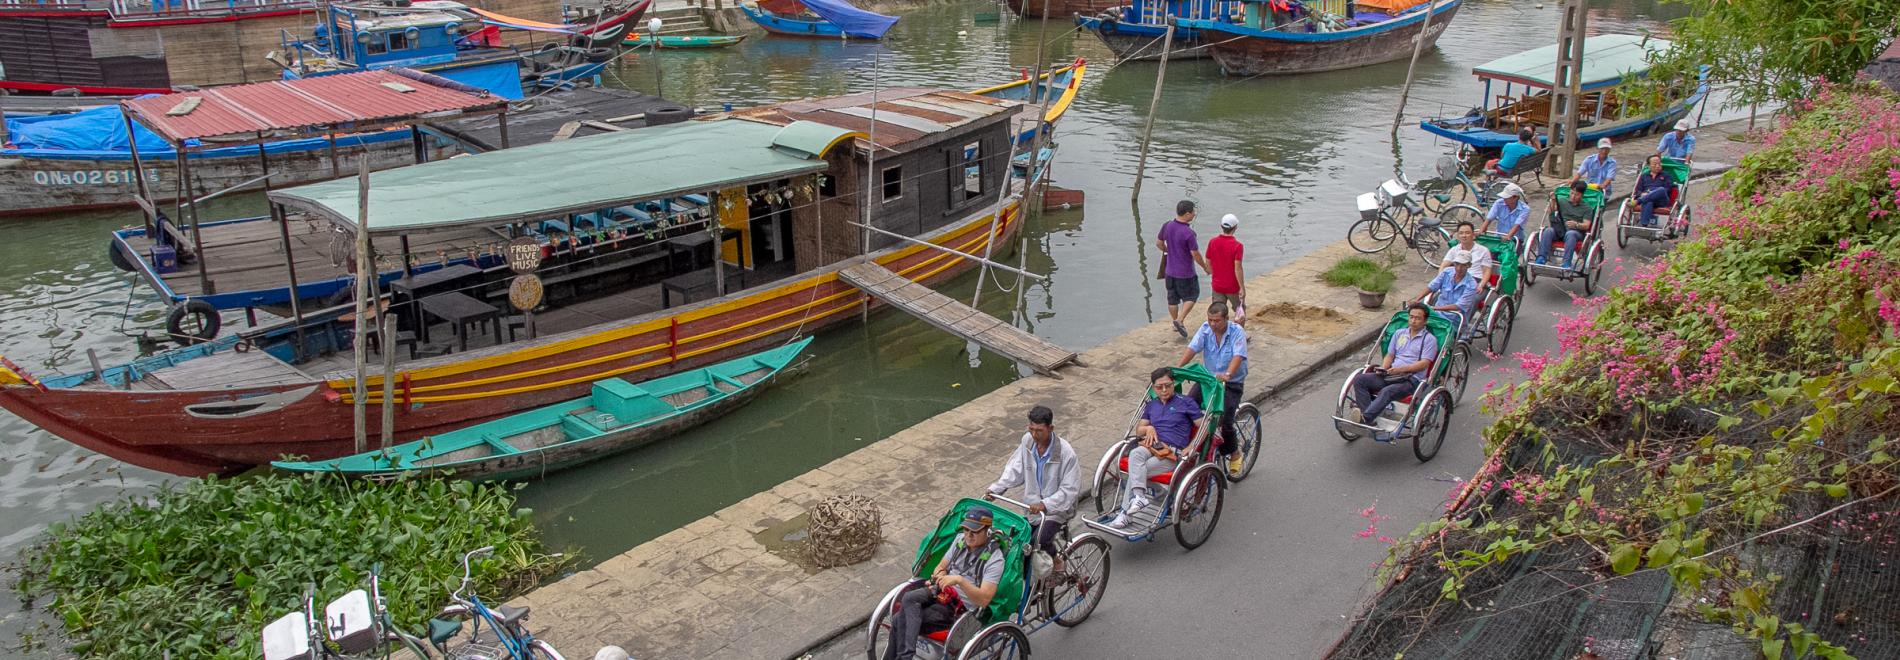 Boats in Hoi An, Vietnam